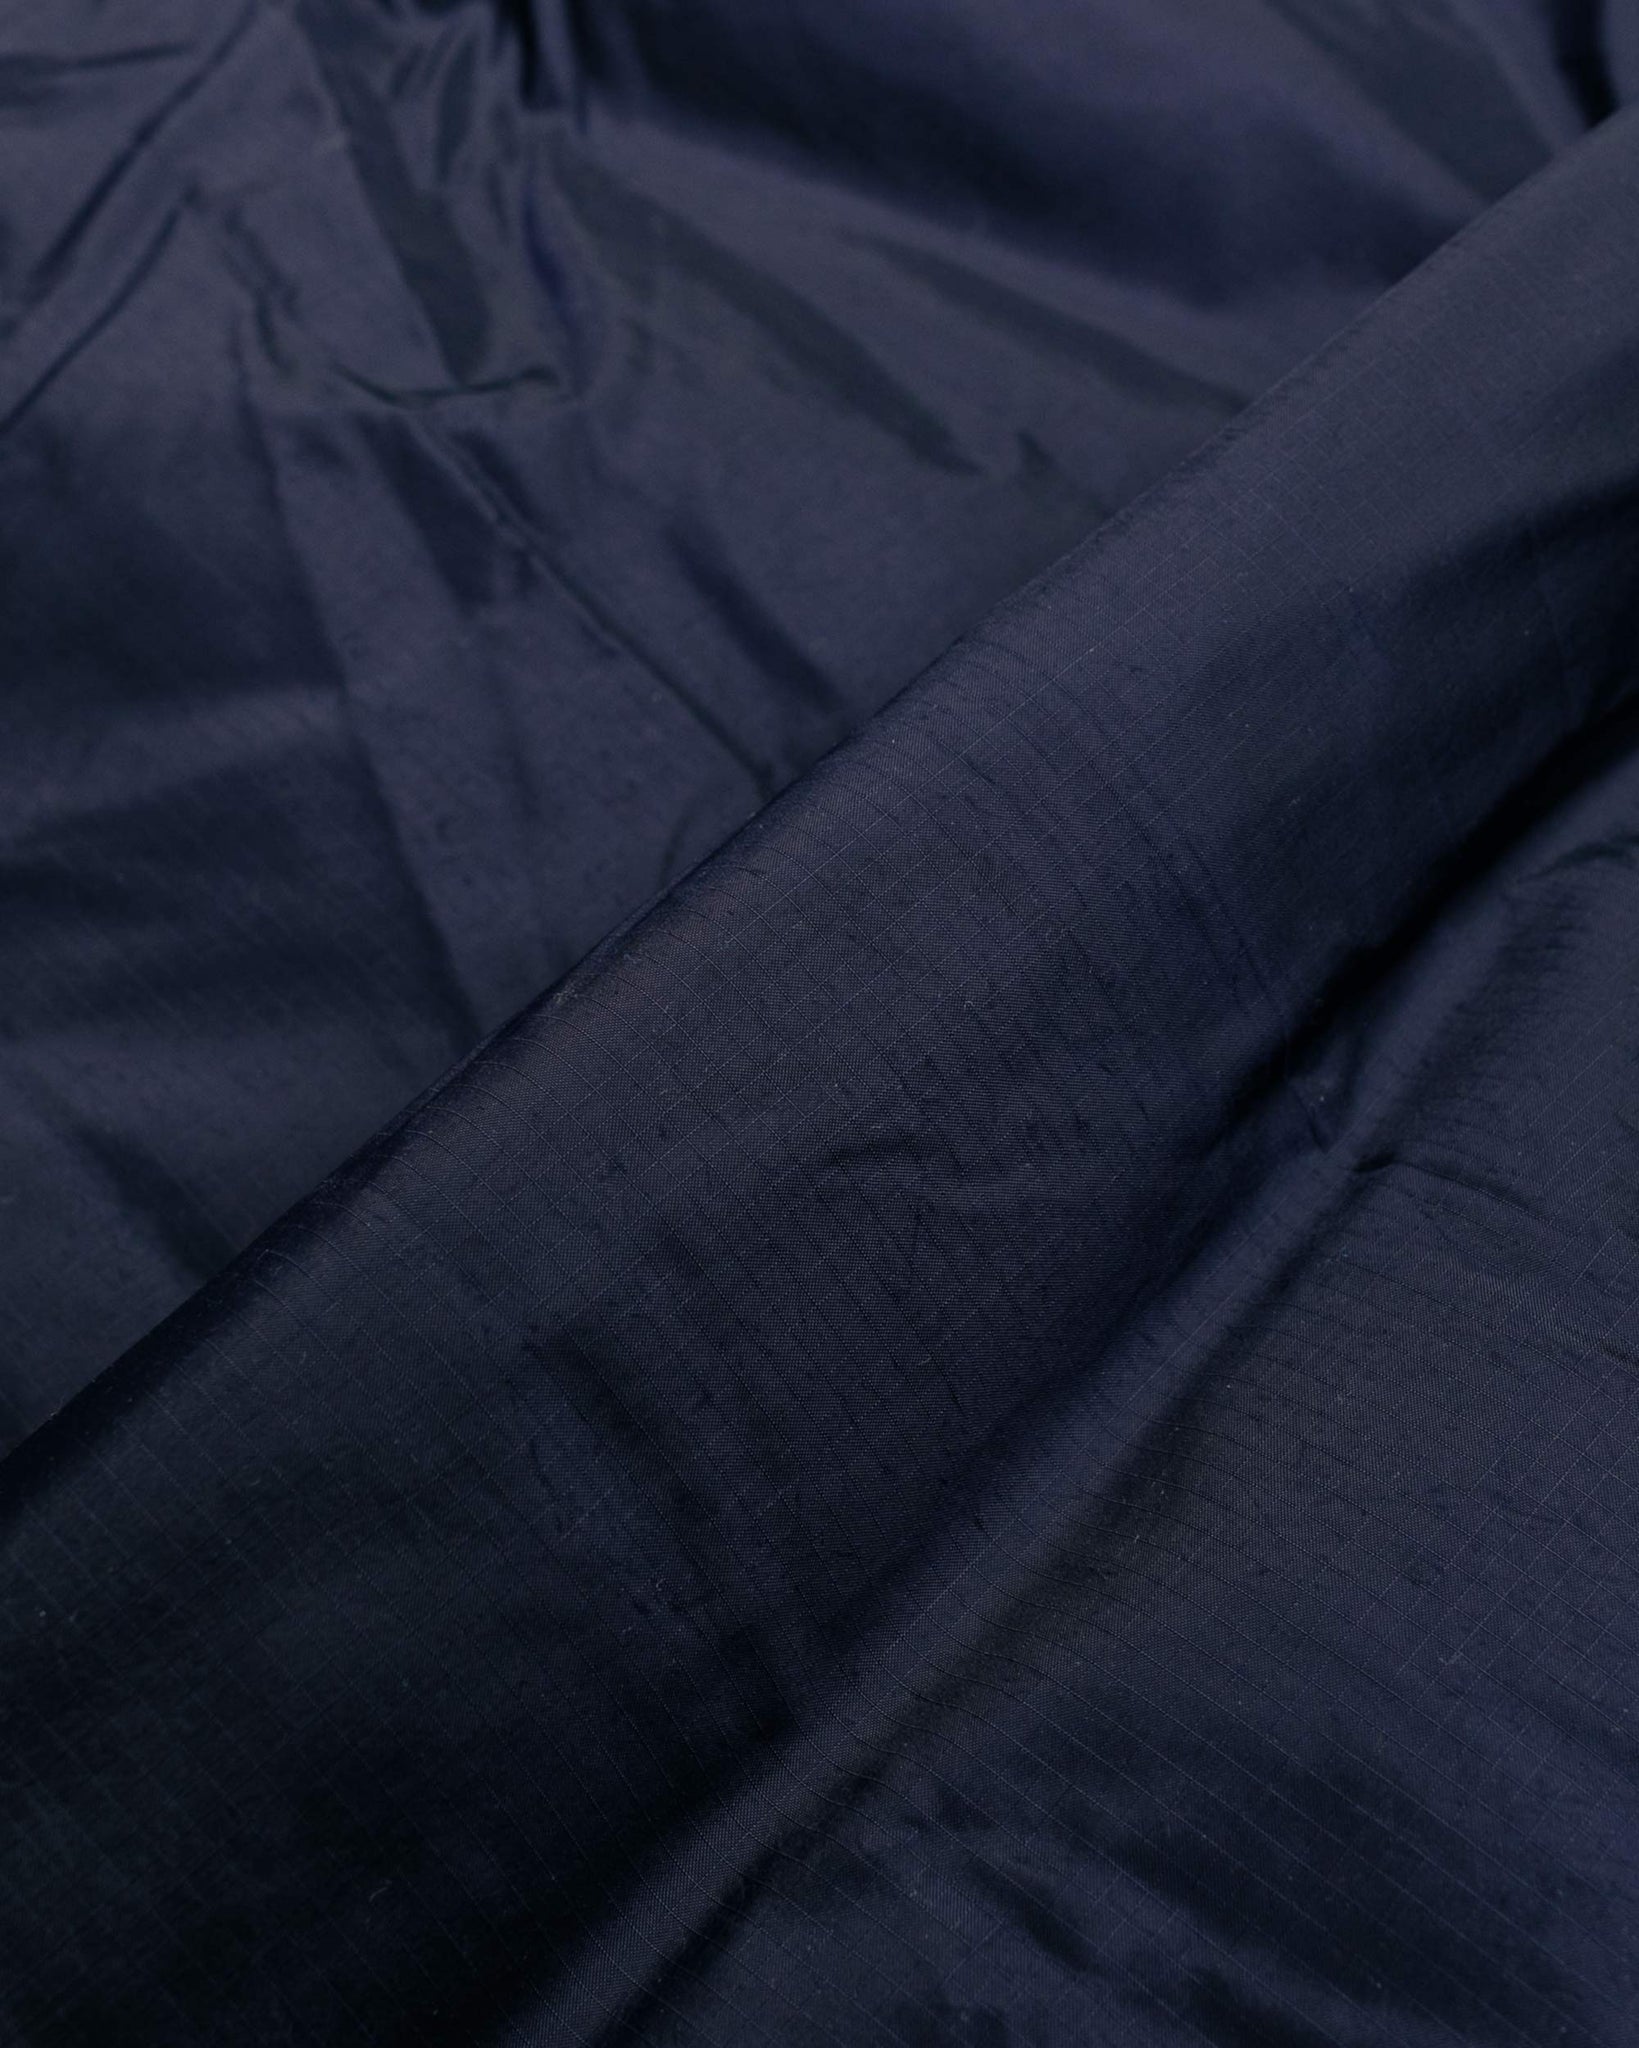 Beams Plus MIL Puff Vest Nylon Ripstop Navy fabric